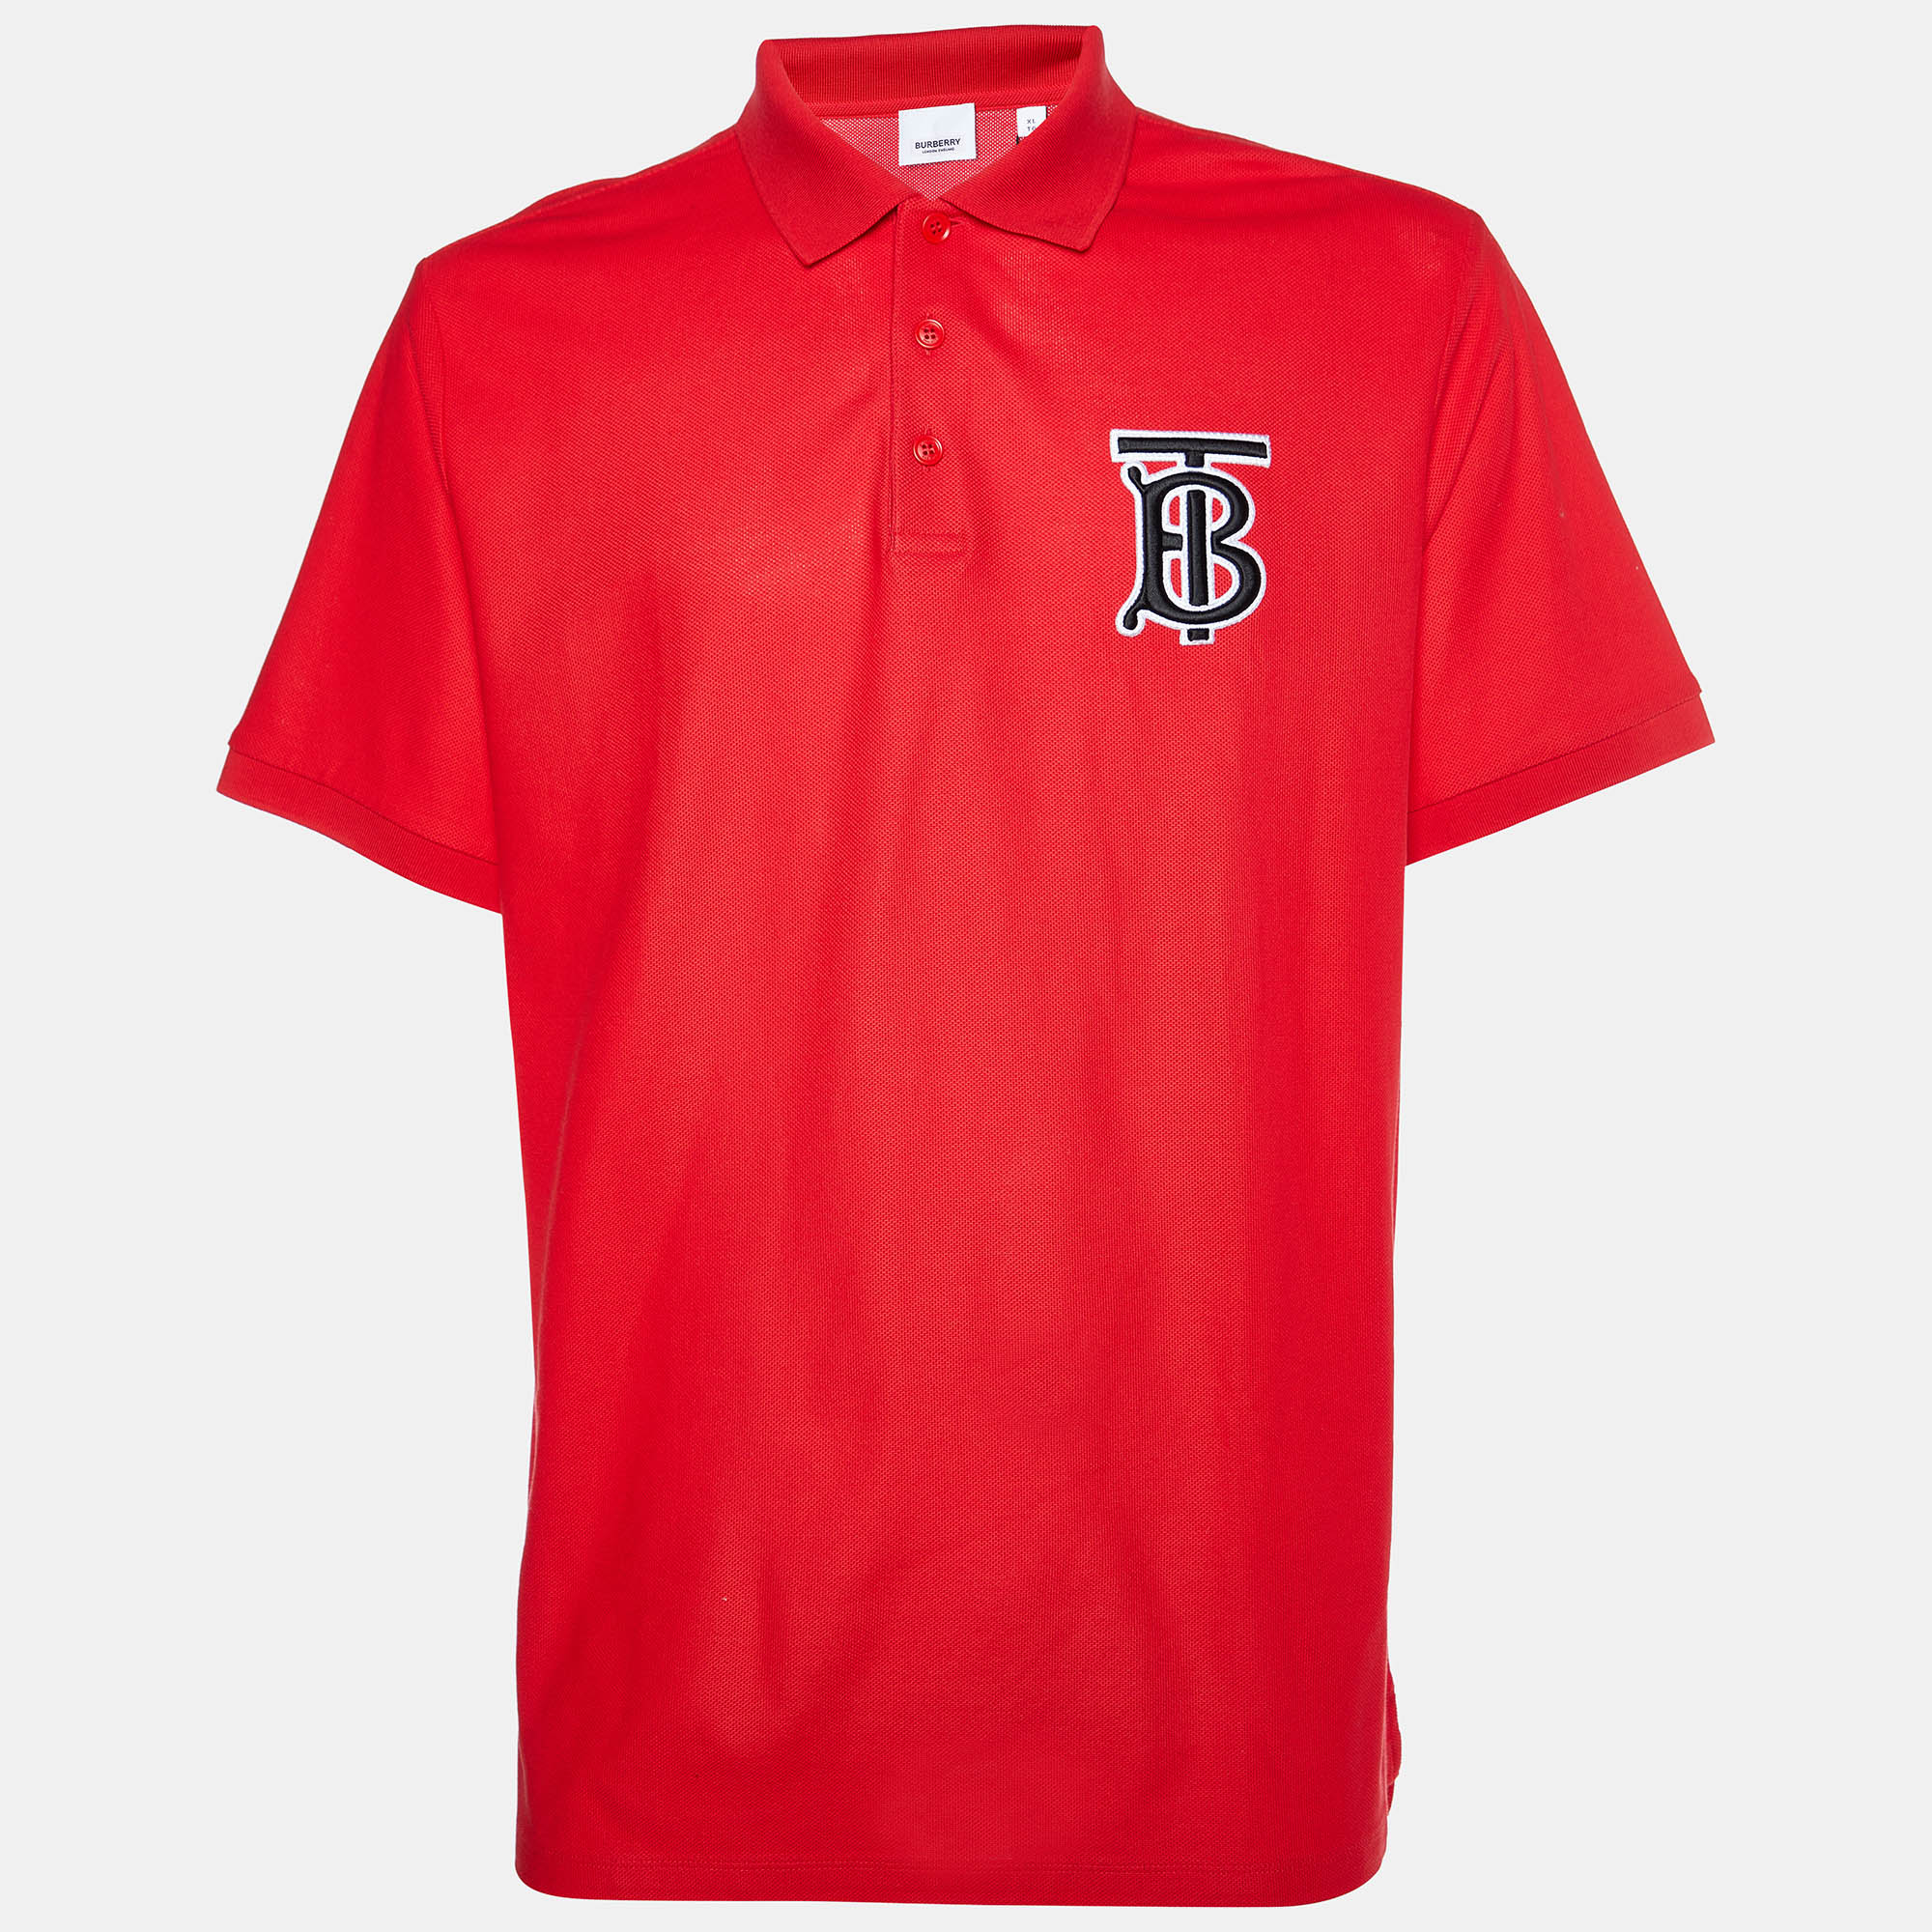 Burberry london red logo cotton pique polo t-shirt xl